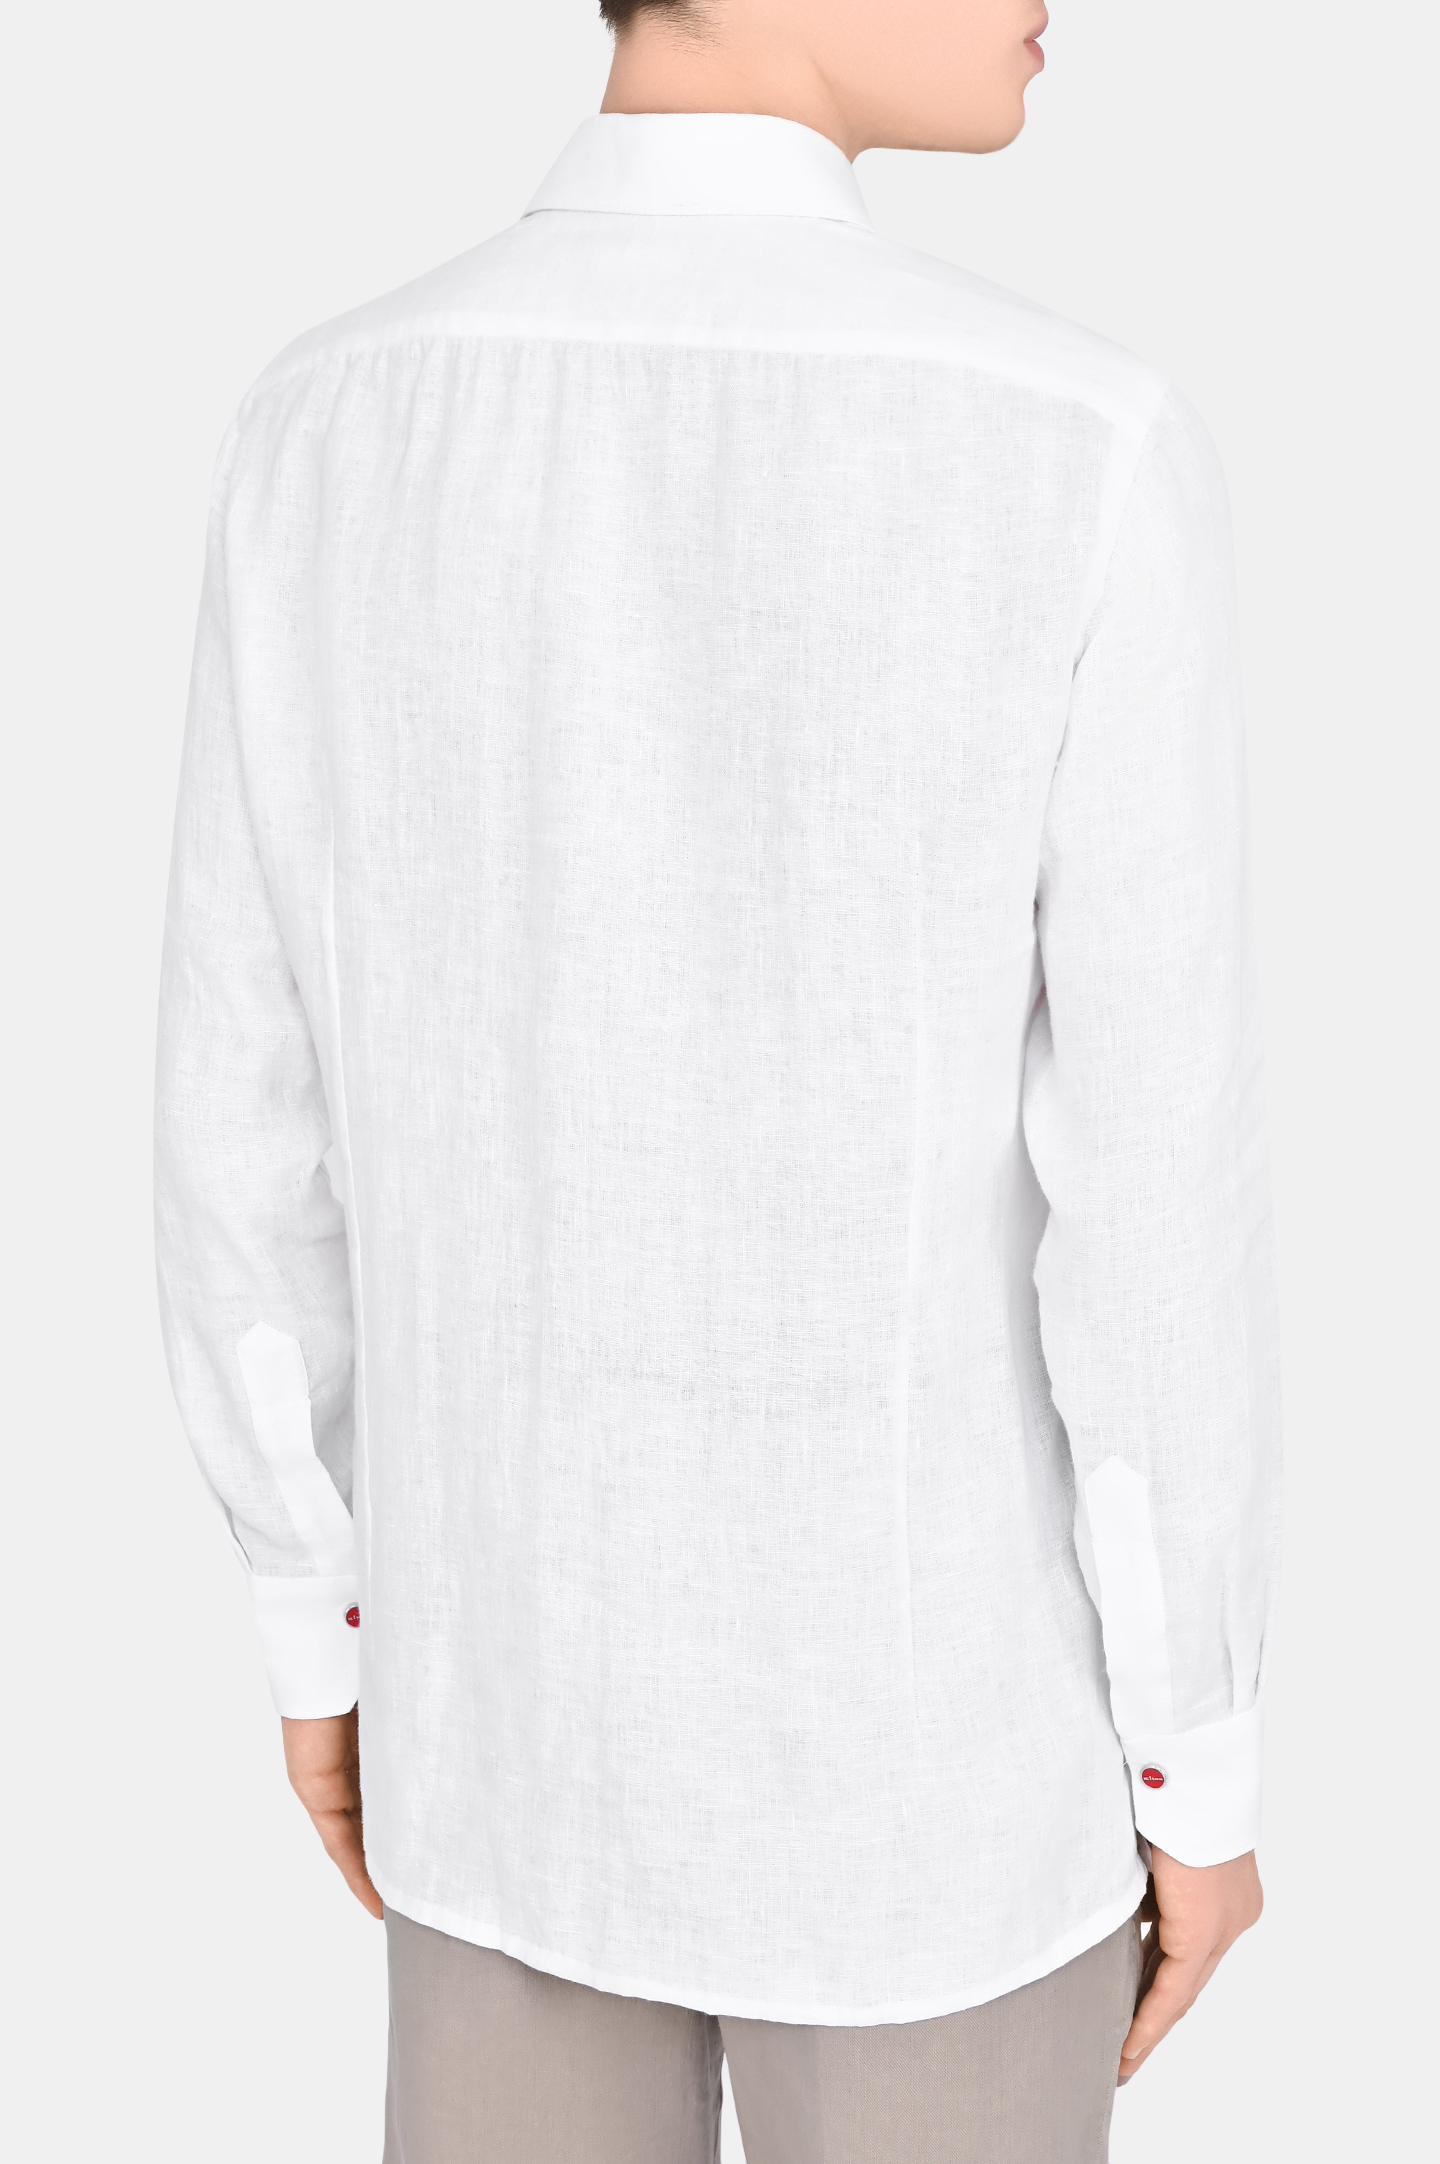 Рубашка KITON UMCNERPH084000, цвет: Белый, Мужской